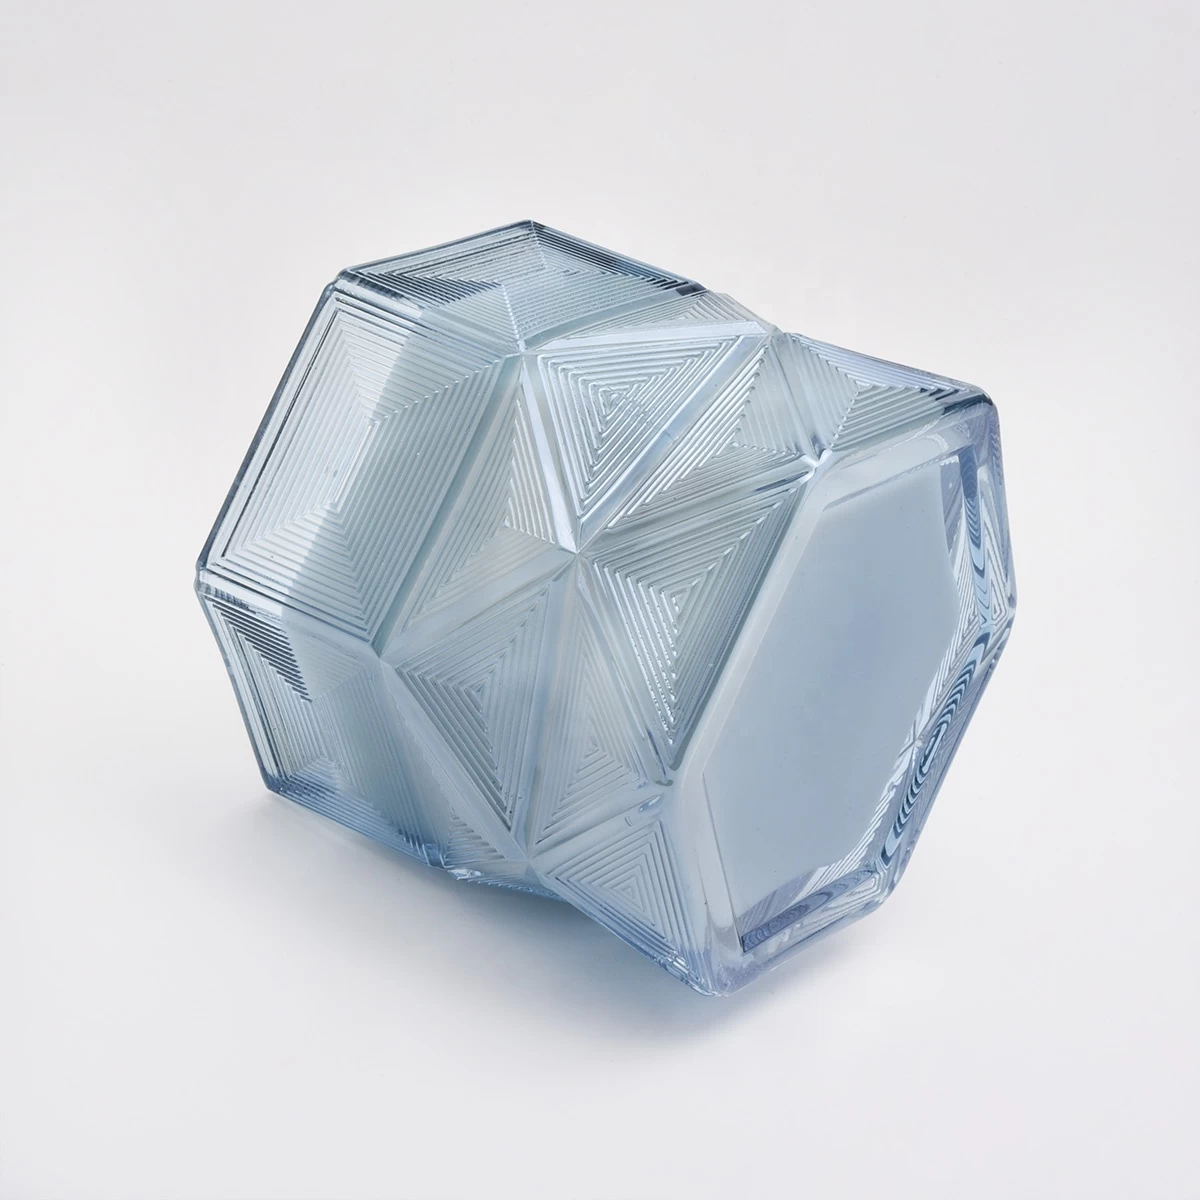 Sunny patent design luxury hexagon empty glass candle jars